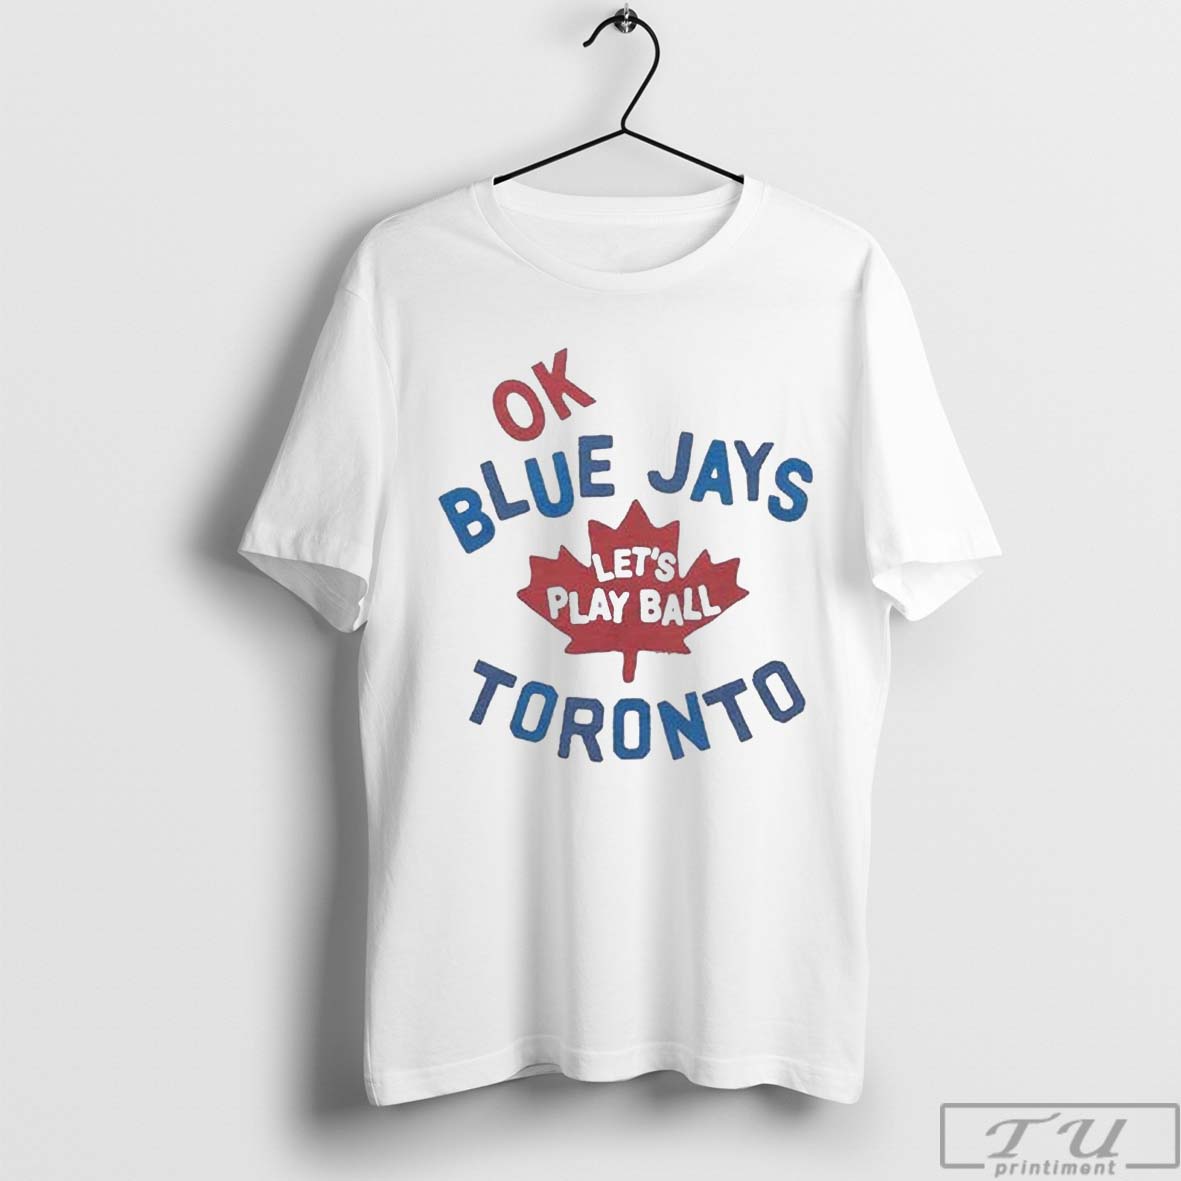 Toronto Blue Jays T-Shirts, Blue Jays Tees, Shirts